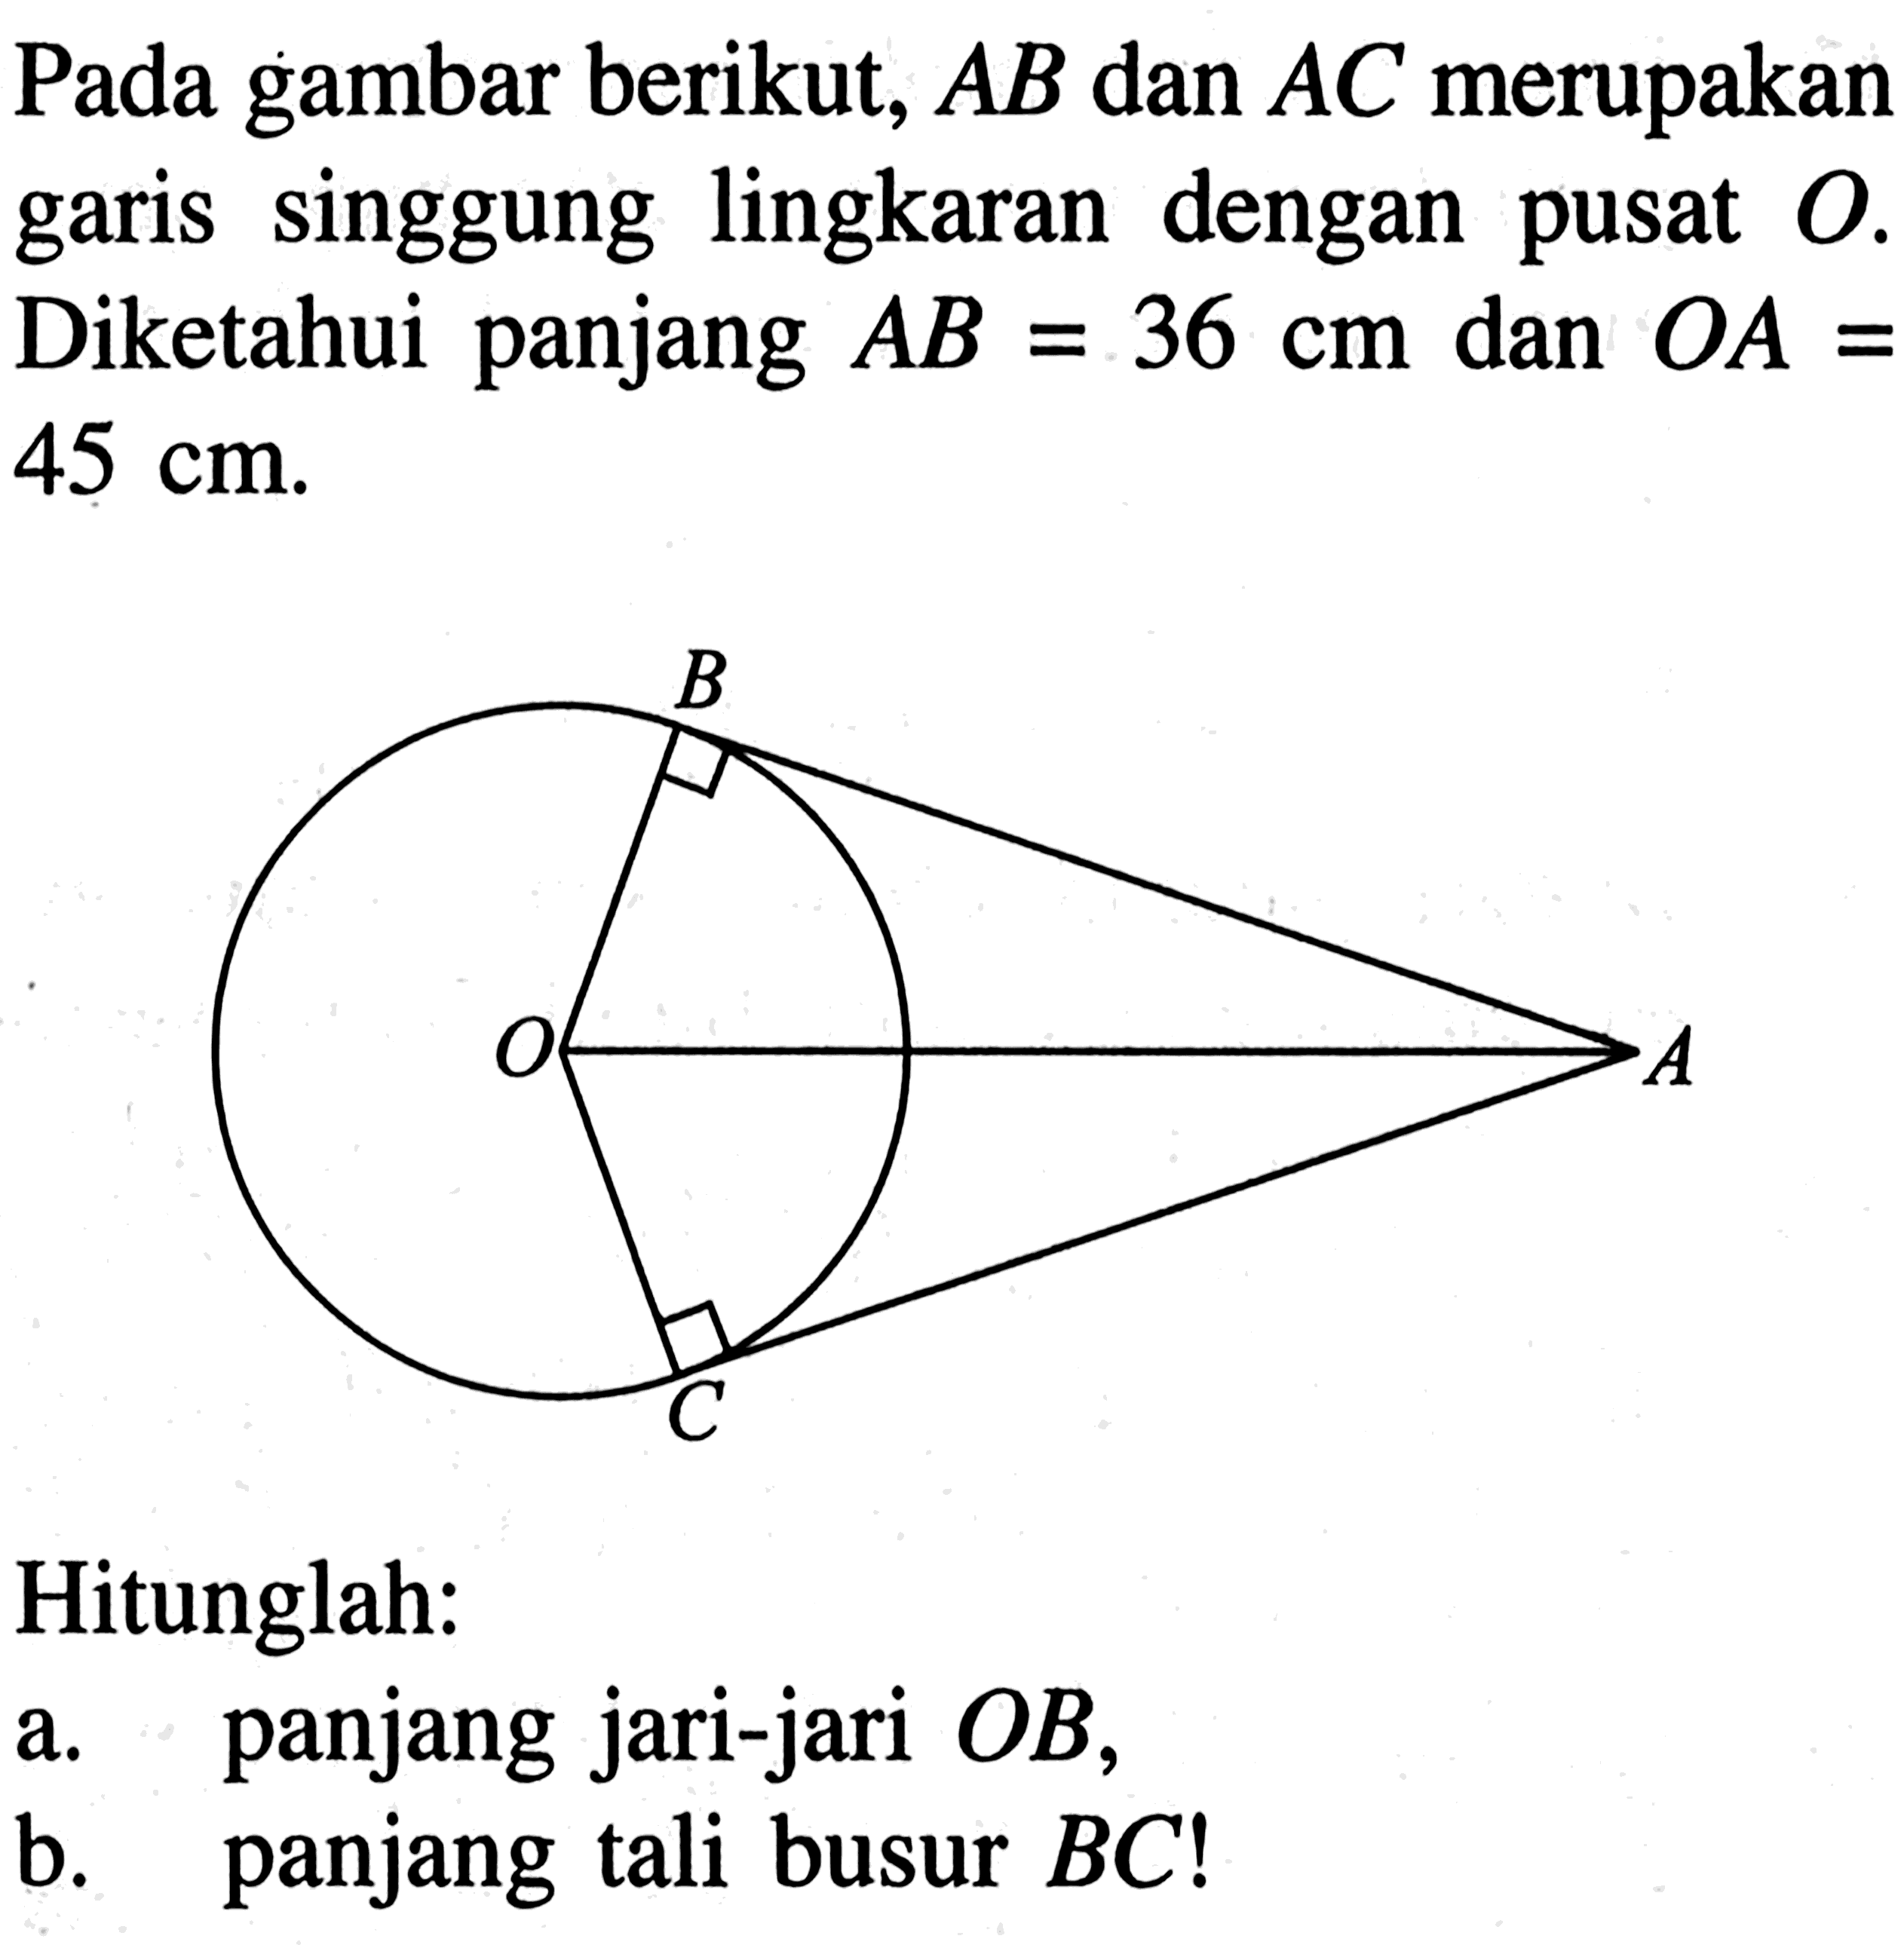 Pada gambar berikut, AB dan AC merupakan garis singgung lingkaran dengan pusat O. Diketahui panjang AB=36 cm dan OA= 45 cm. Hitunglah: a. panjang jari-jari OB, b. panjang tali busur BC!